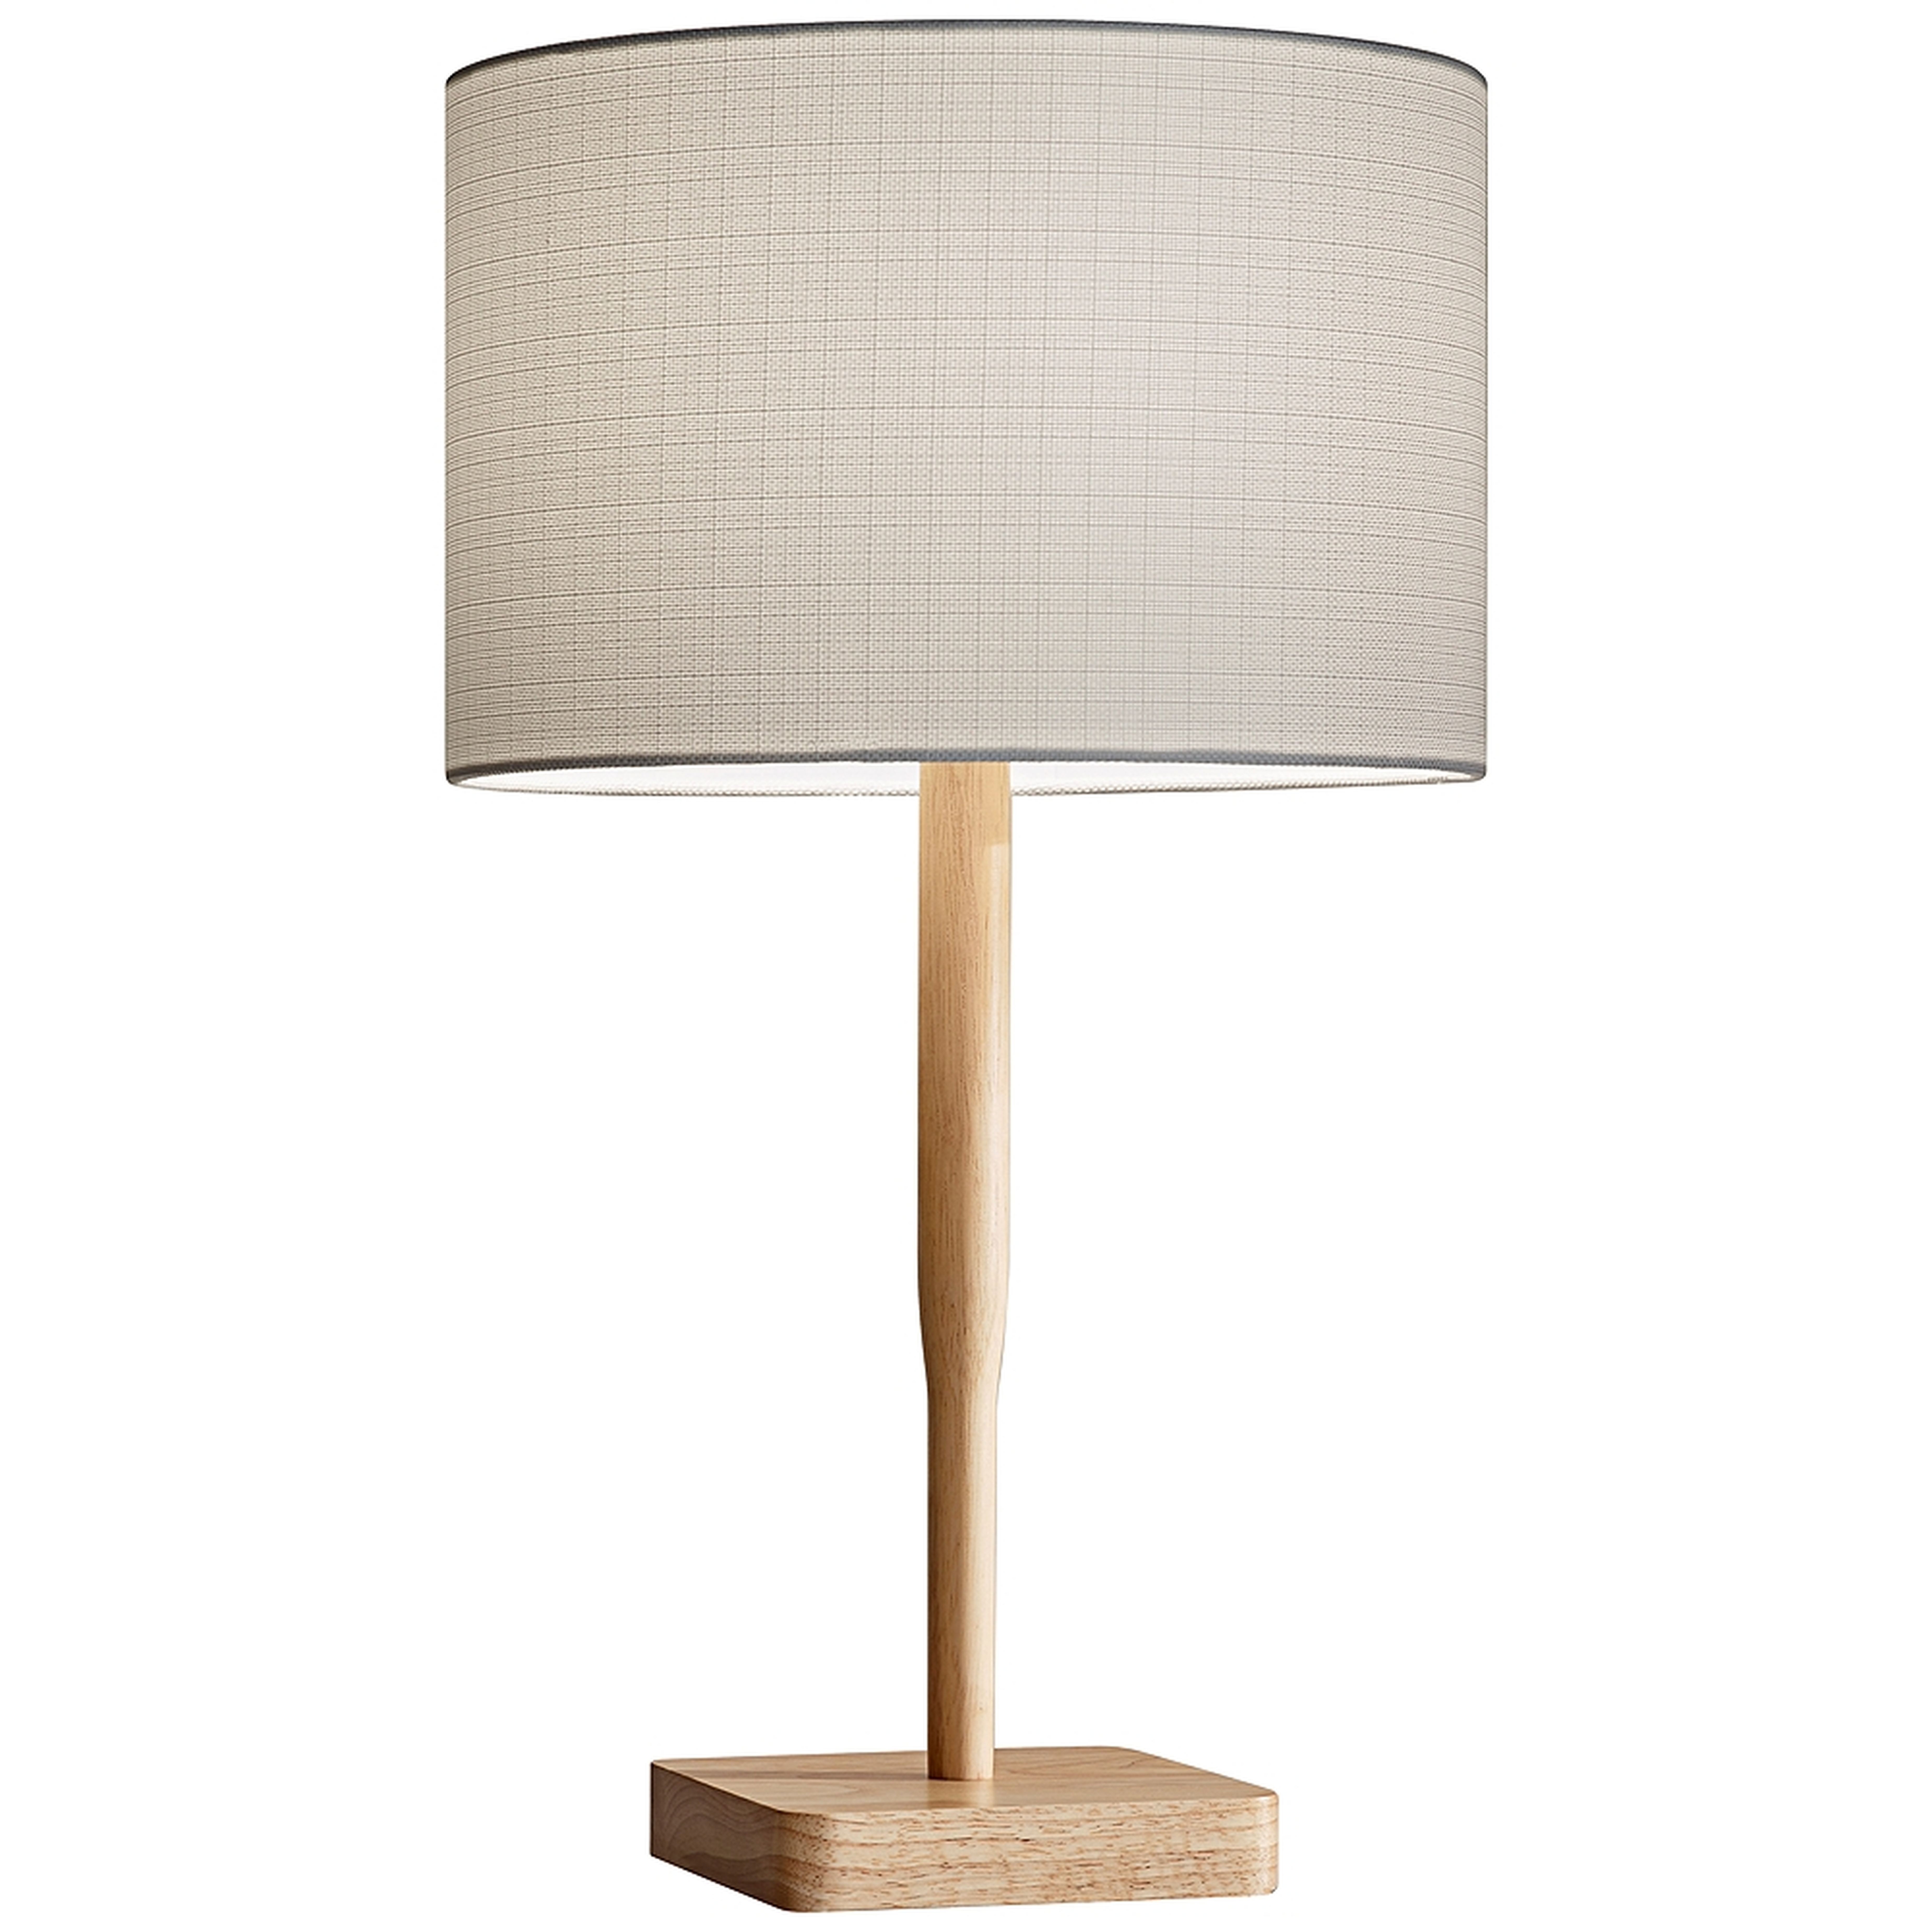 Ellis Natural Rubberwood Table Lamp - Style # 12R95 - Lamps Plus